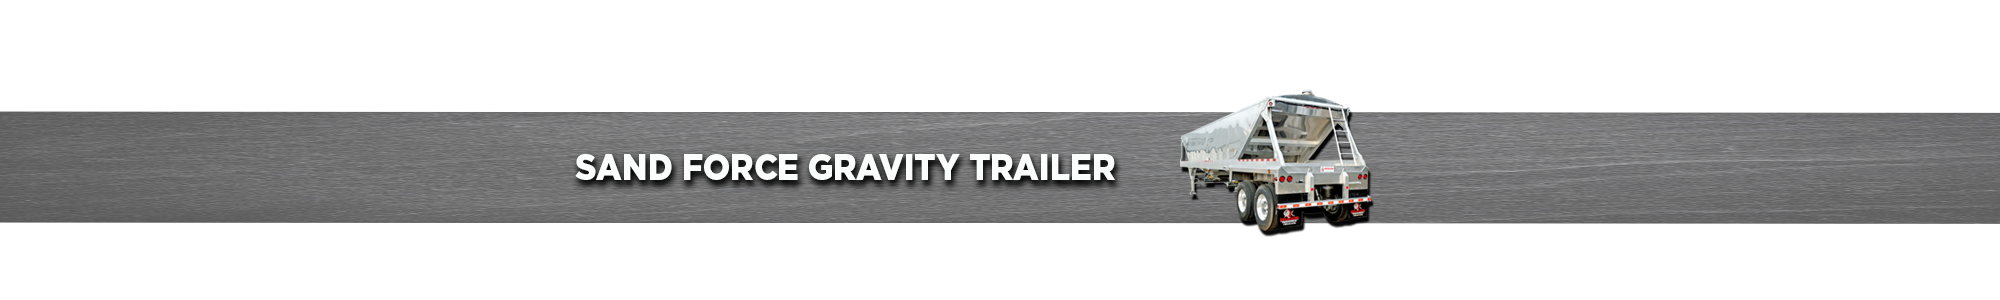 Sand Force Gravity Trailer